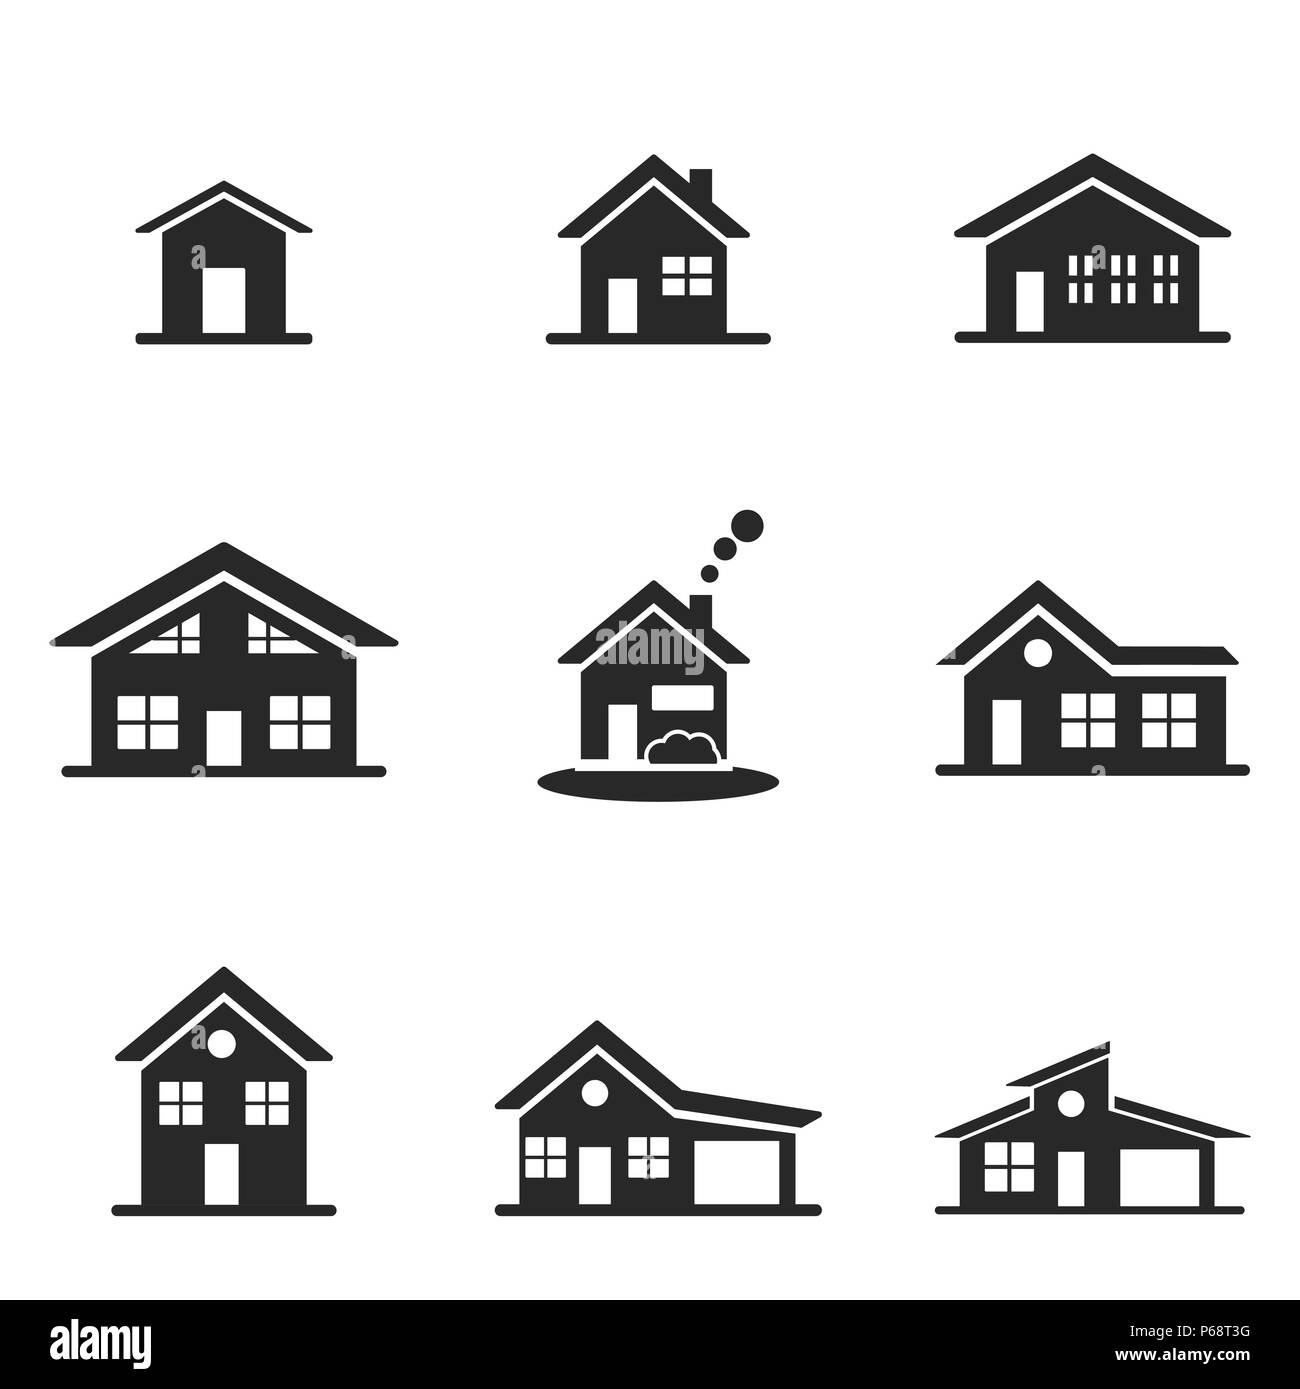 House icon set. Line style icon design. UI. Illustration of house icons ...